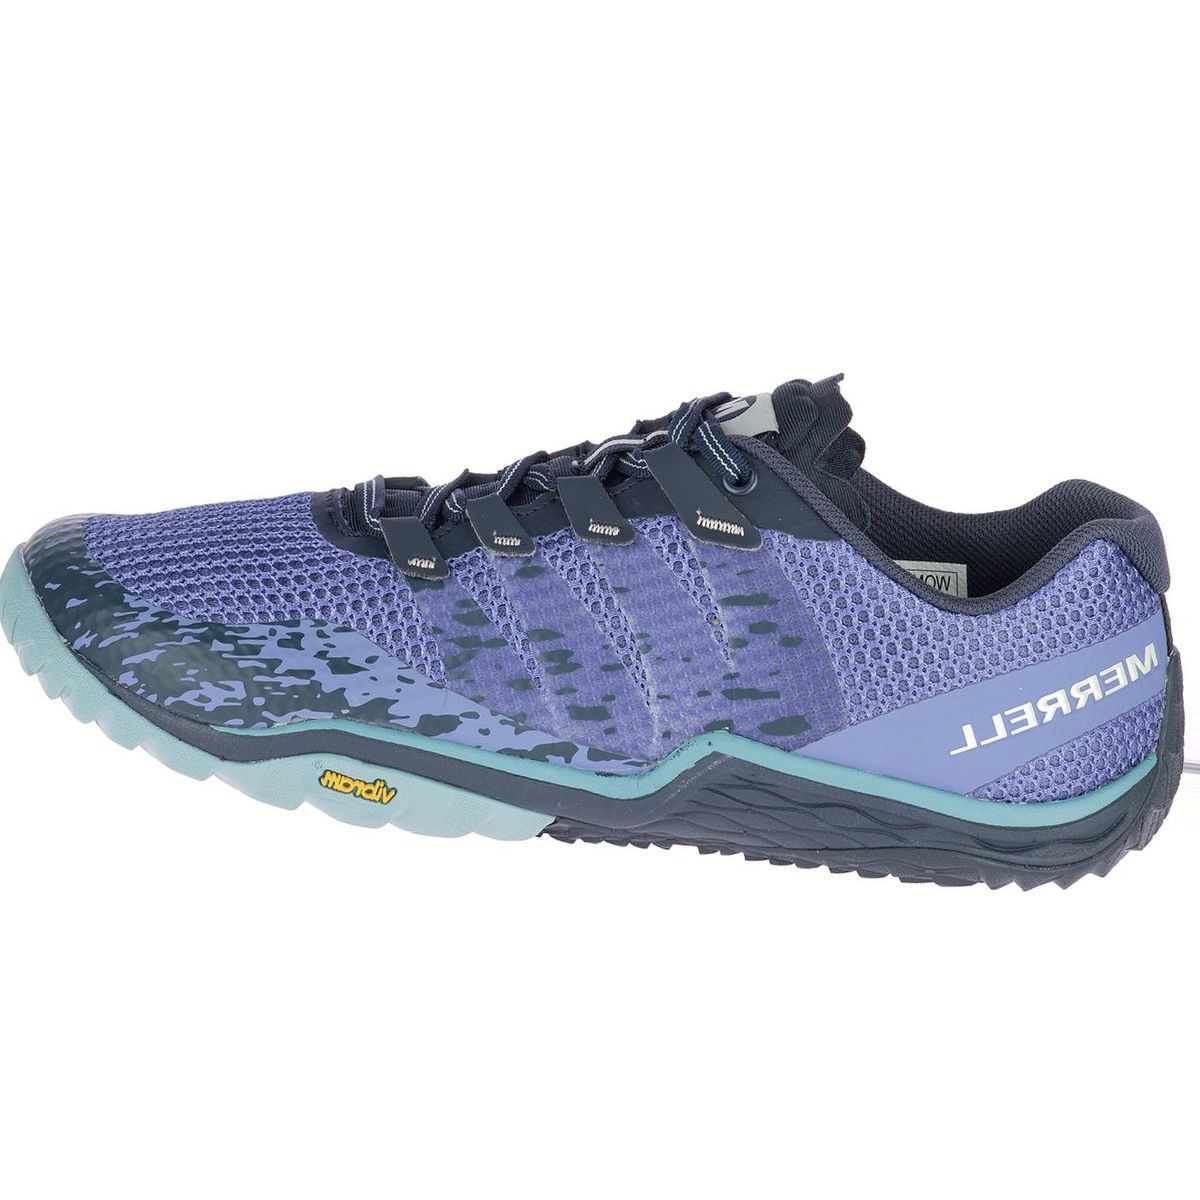 Merrell Trail Glove 5 Running Shoe - Women's